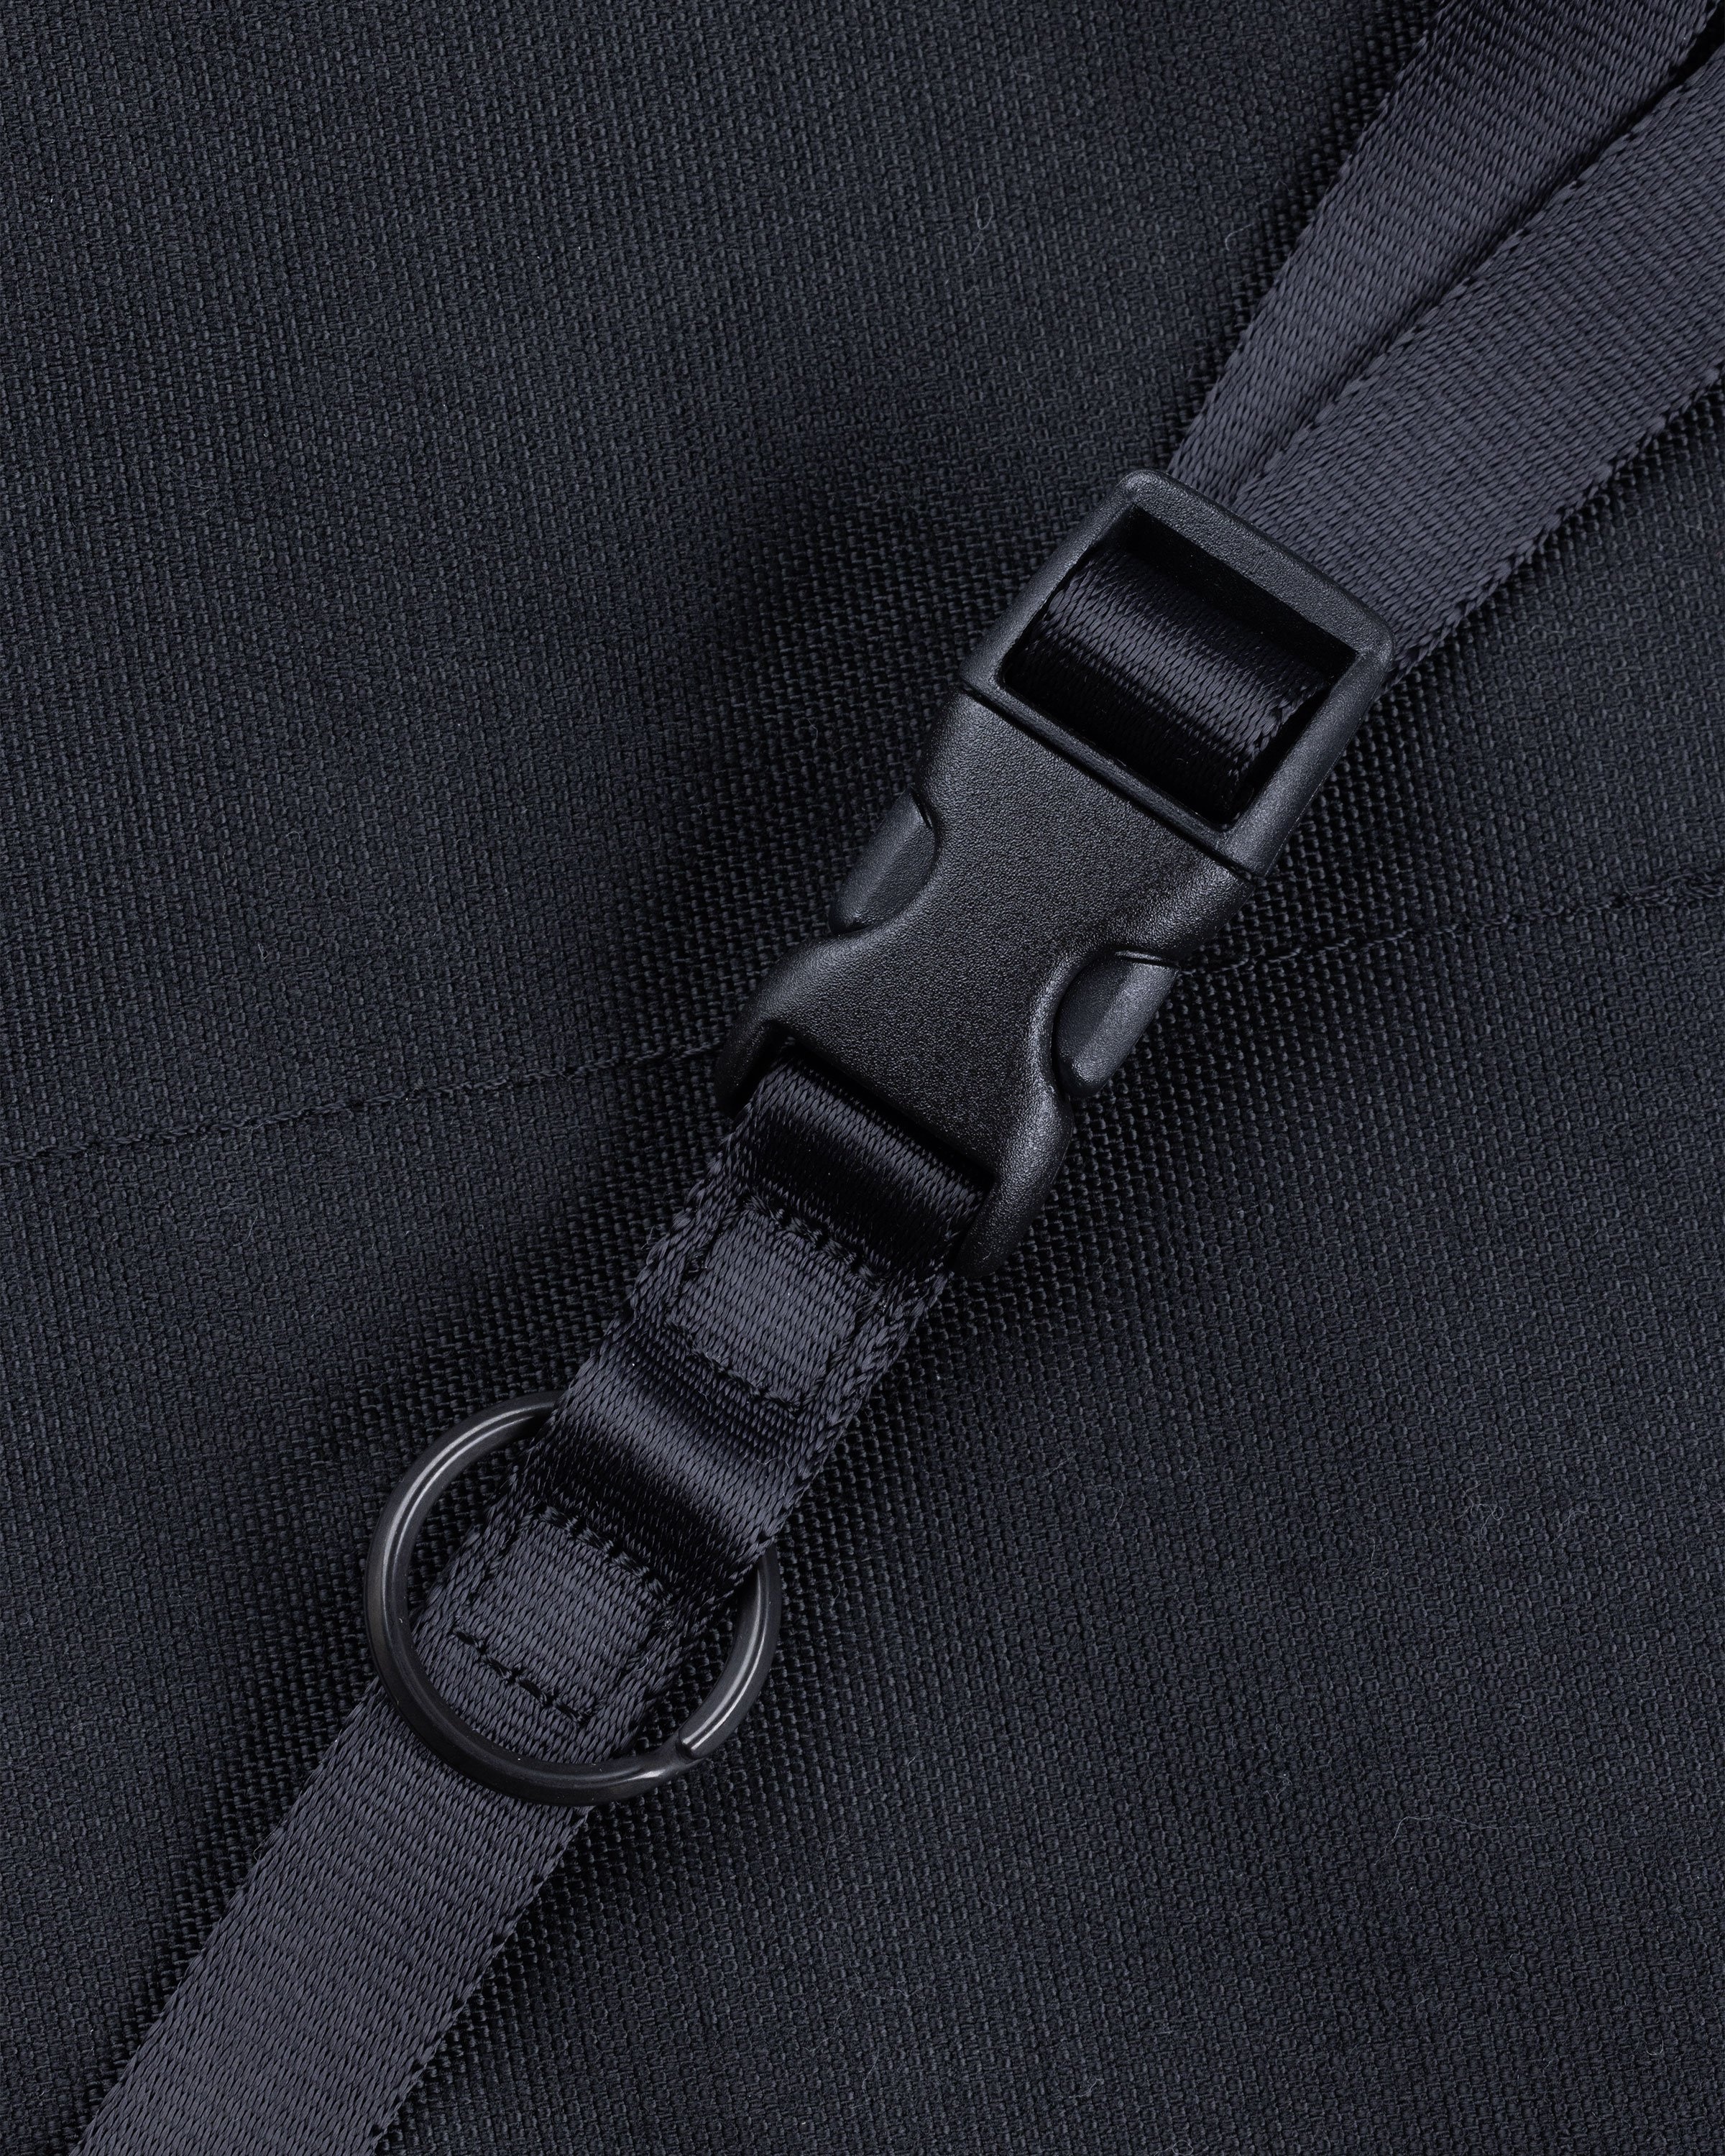 Porter-Yoshida & Co. – Sacoche Hybrid Shoulder Bag Black - Bags - Black - Image 6